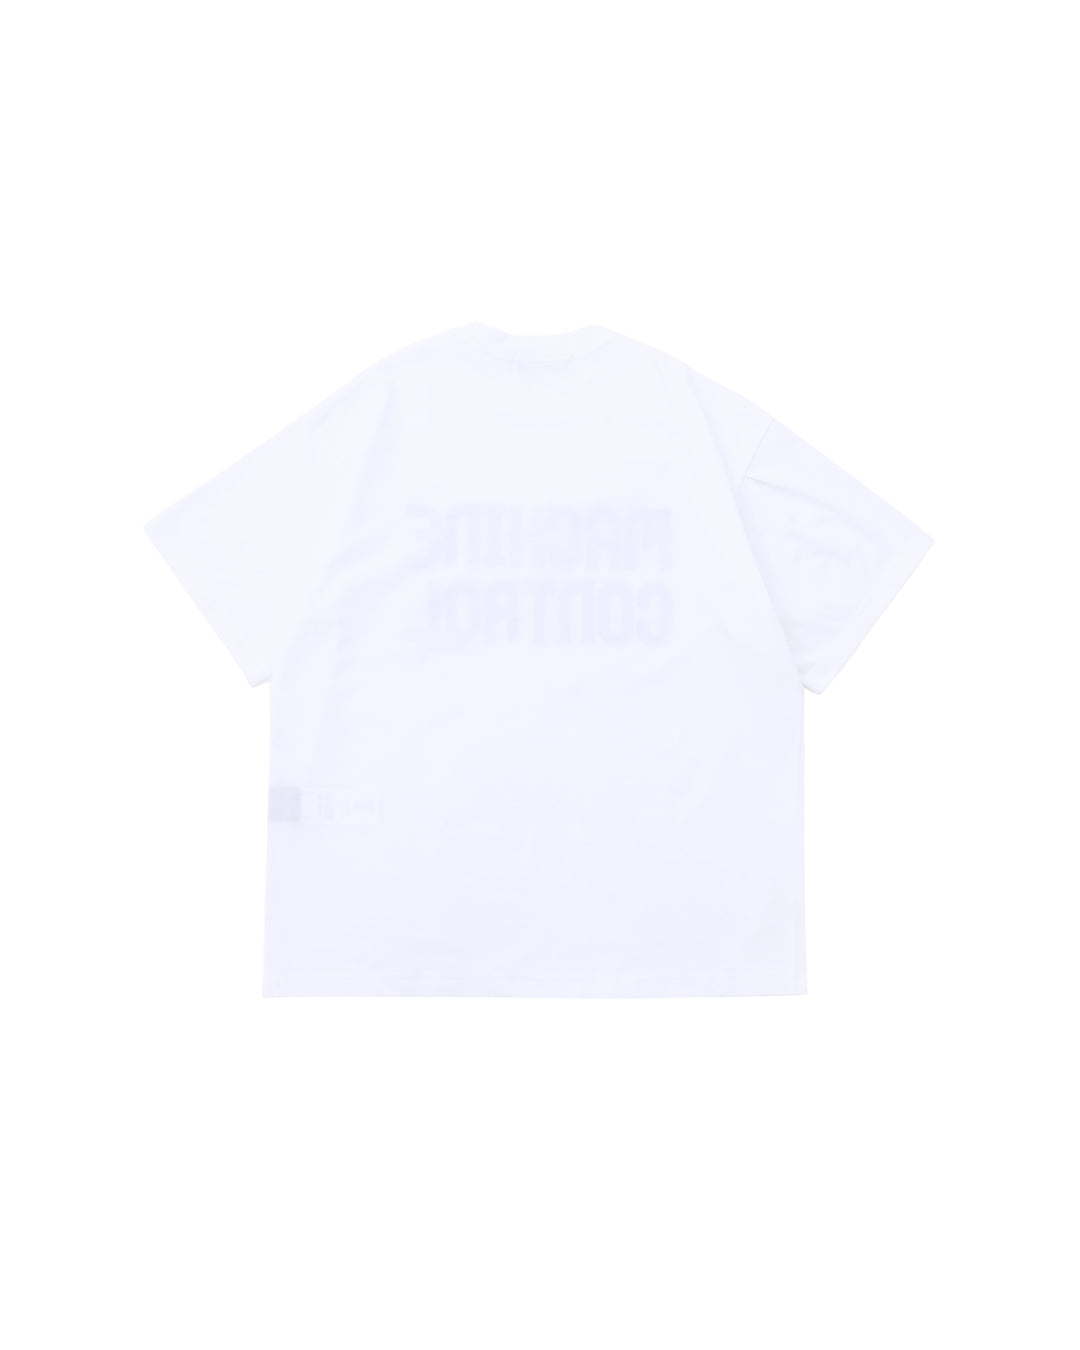 Mistake T-Shirts “Machine Control” / White